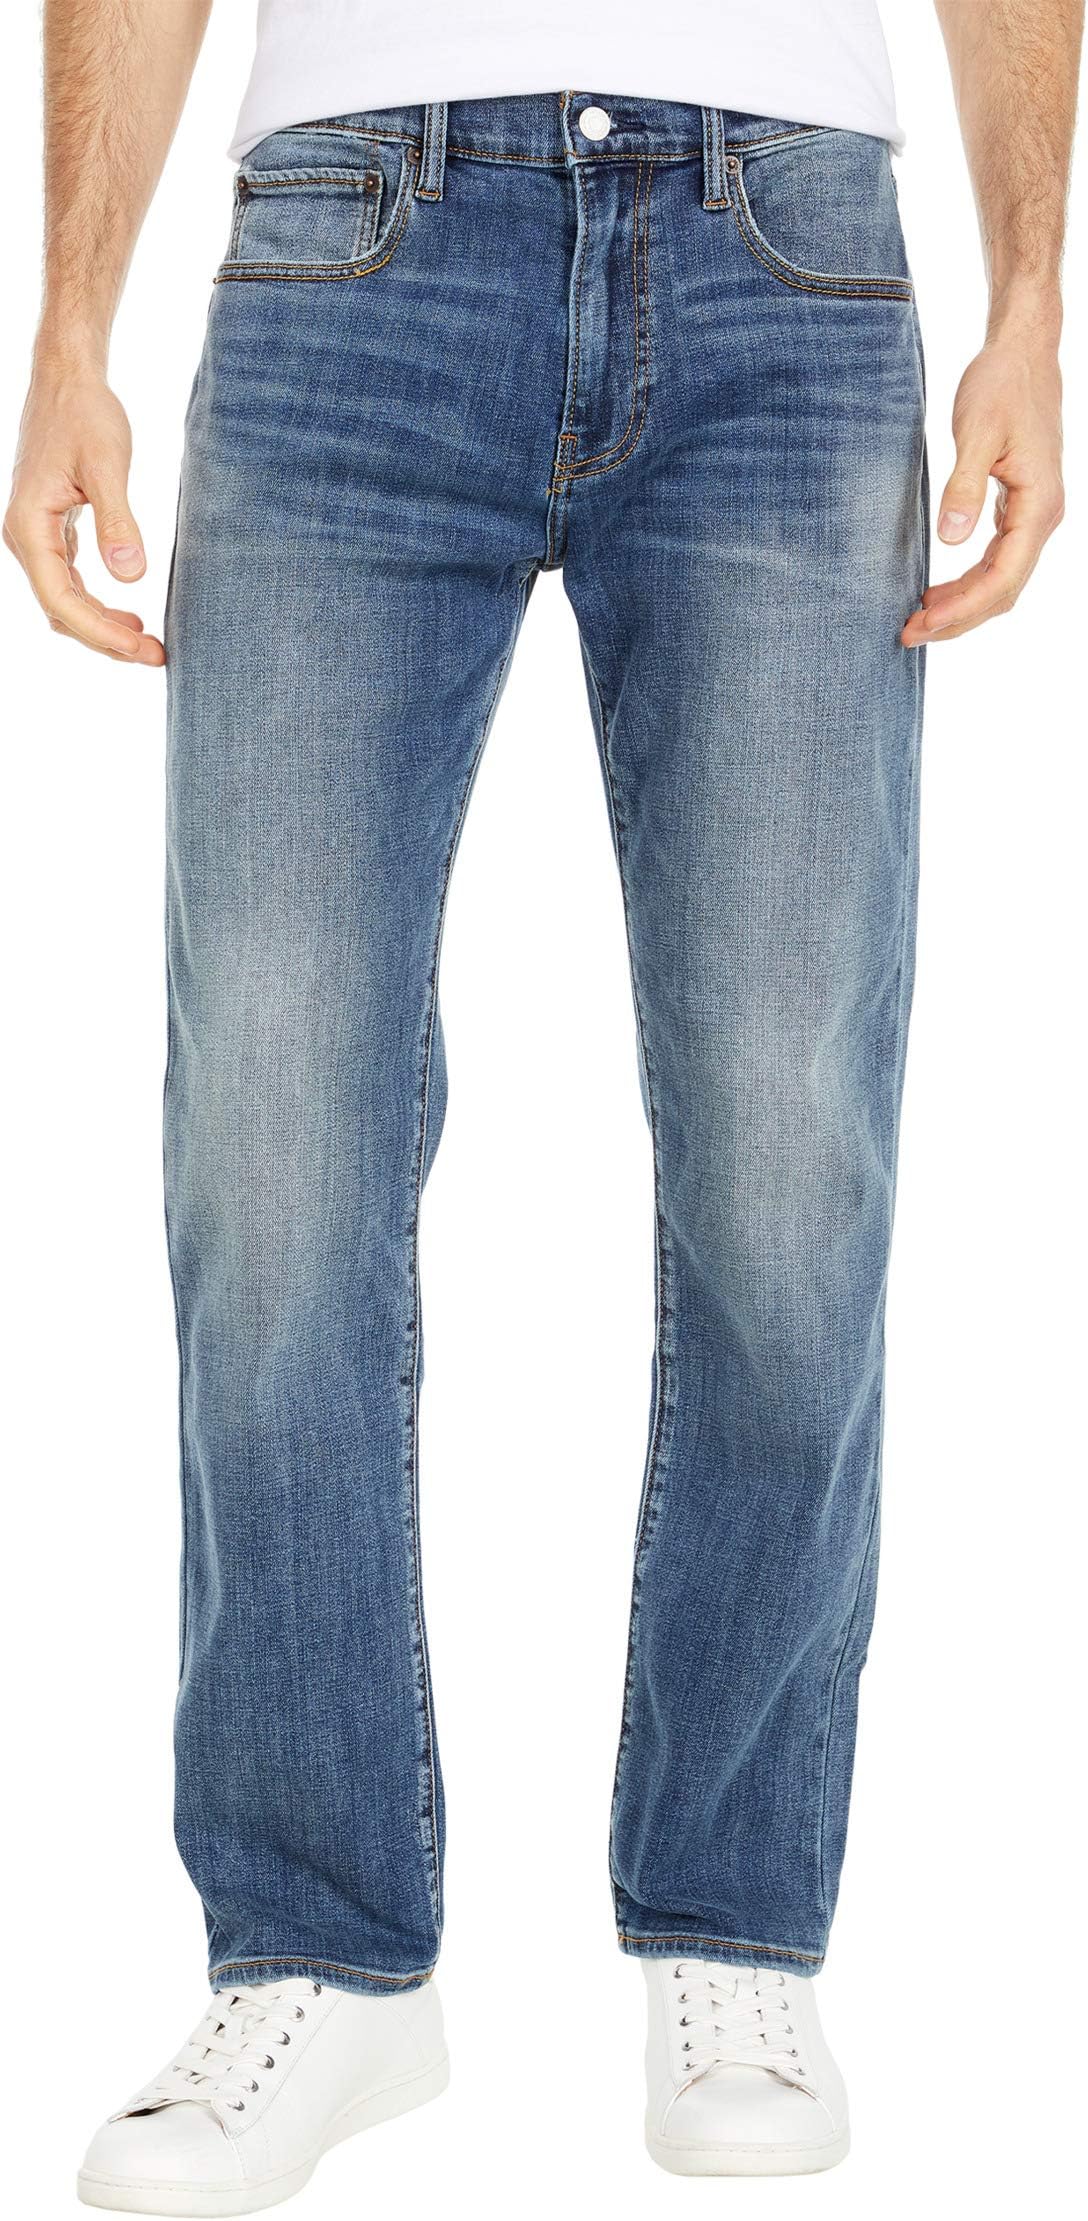 harrison harry deathworld Джинсы 223 Straight Jeans in Harrison Lucky Brand, цвет Harrison